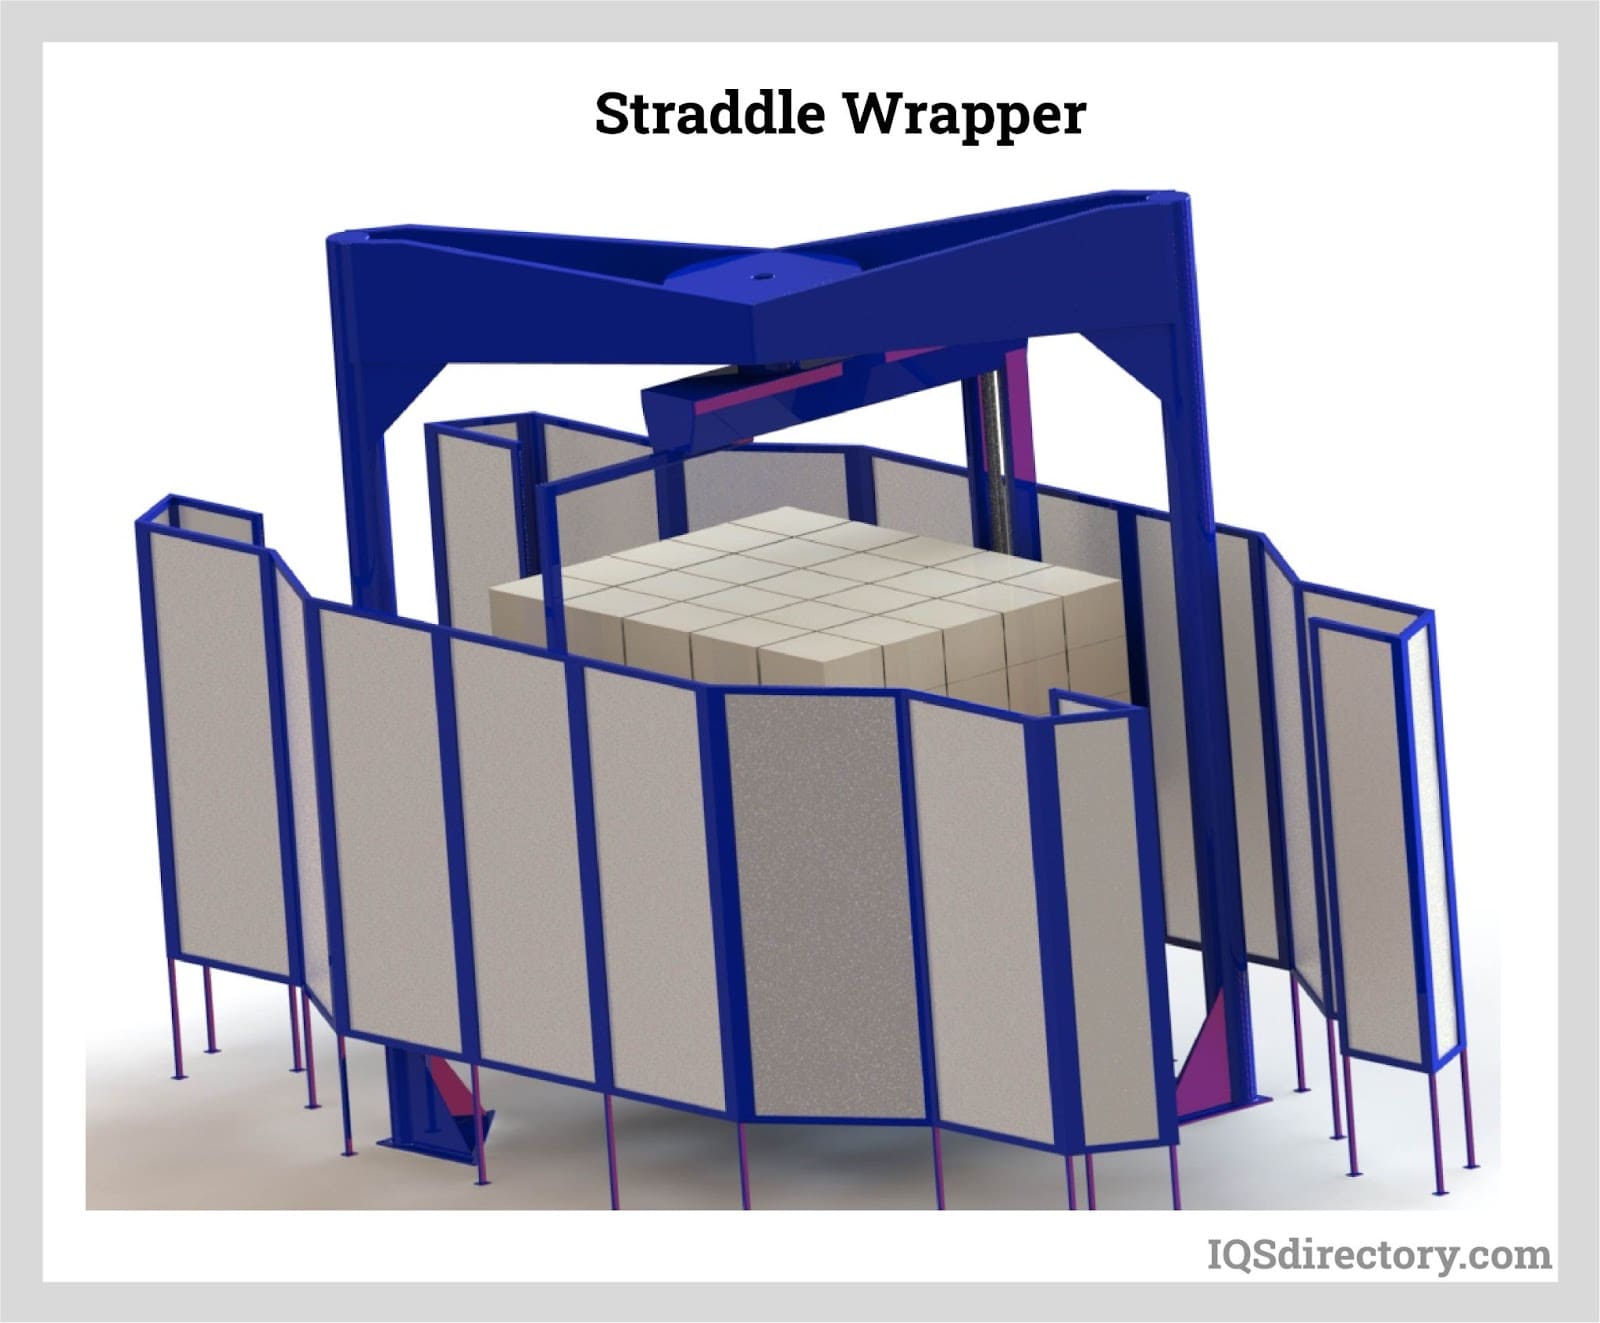 Straddle Wrapper